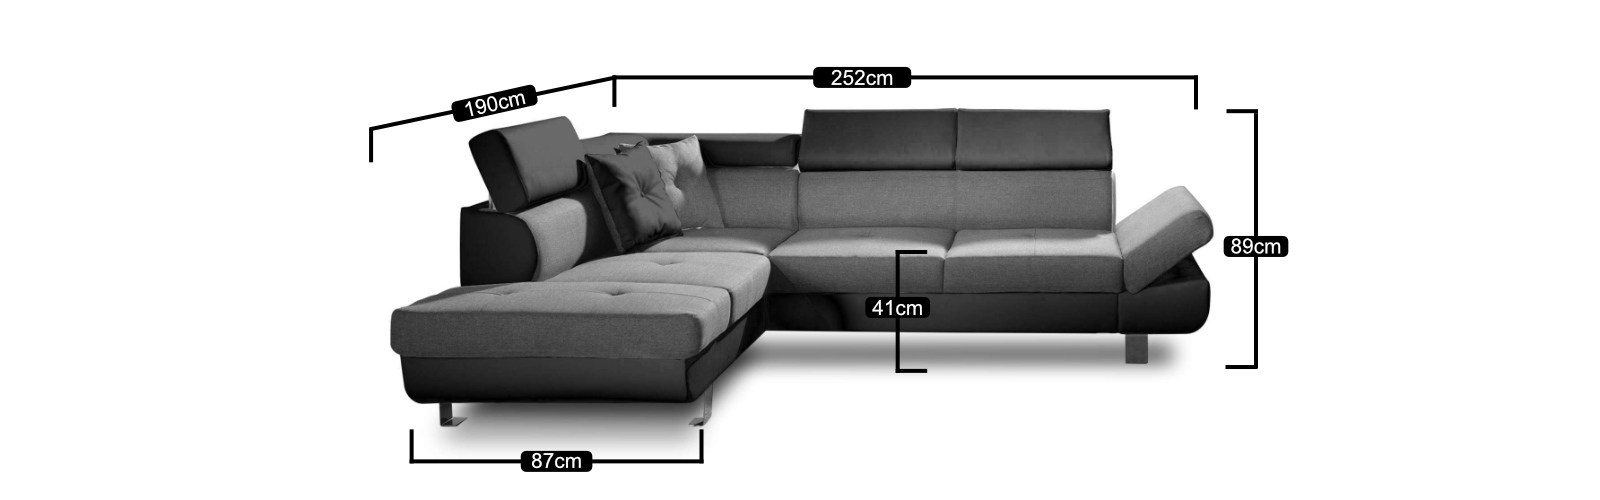 Les dimensions du canapé d'angle gauche Lisbona